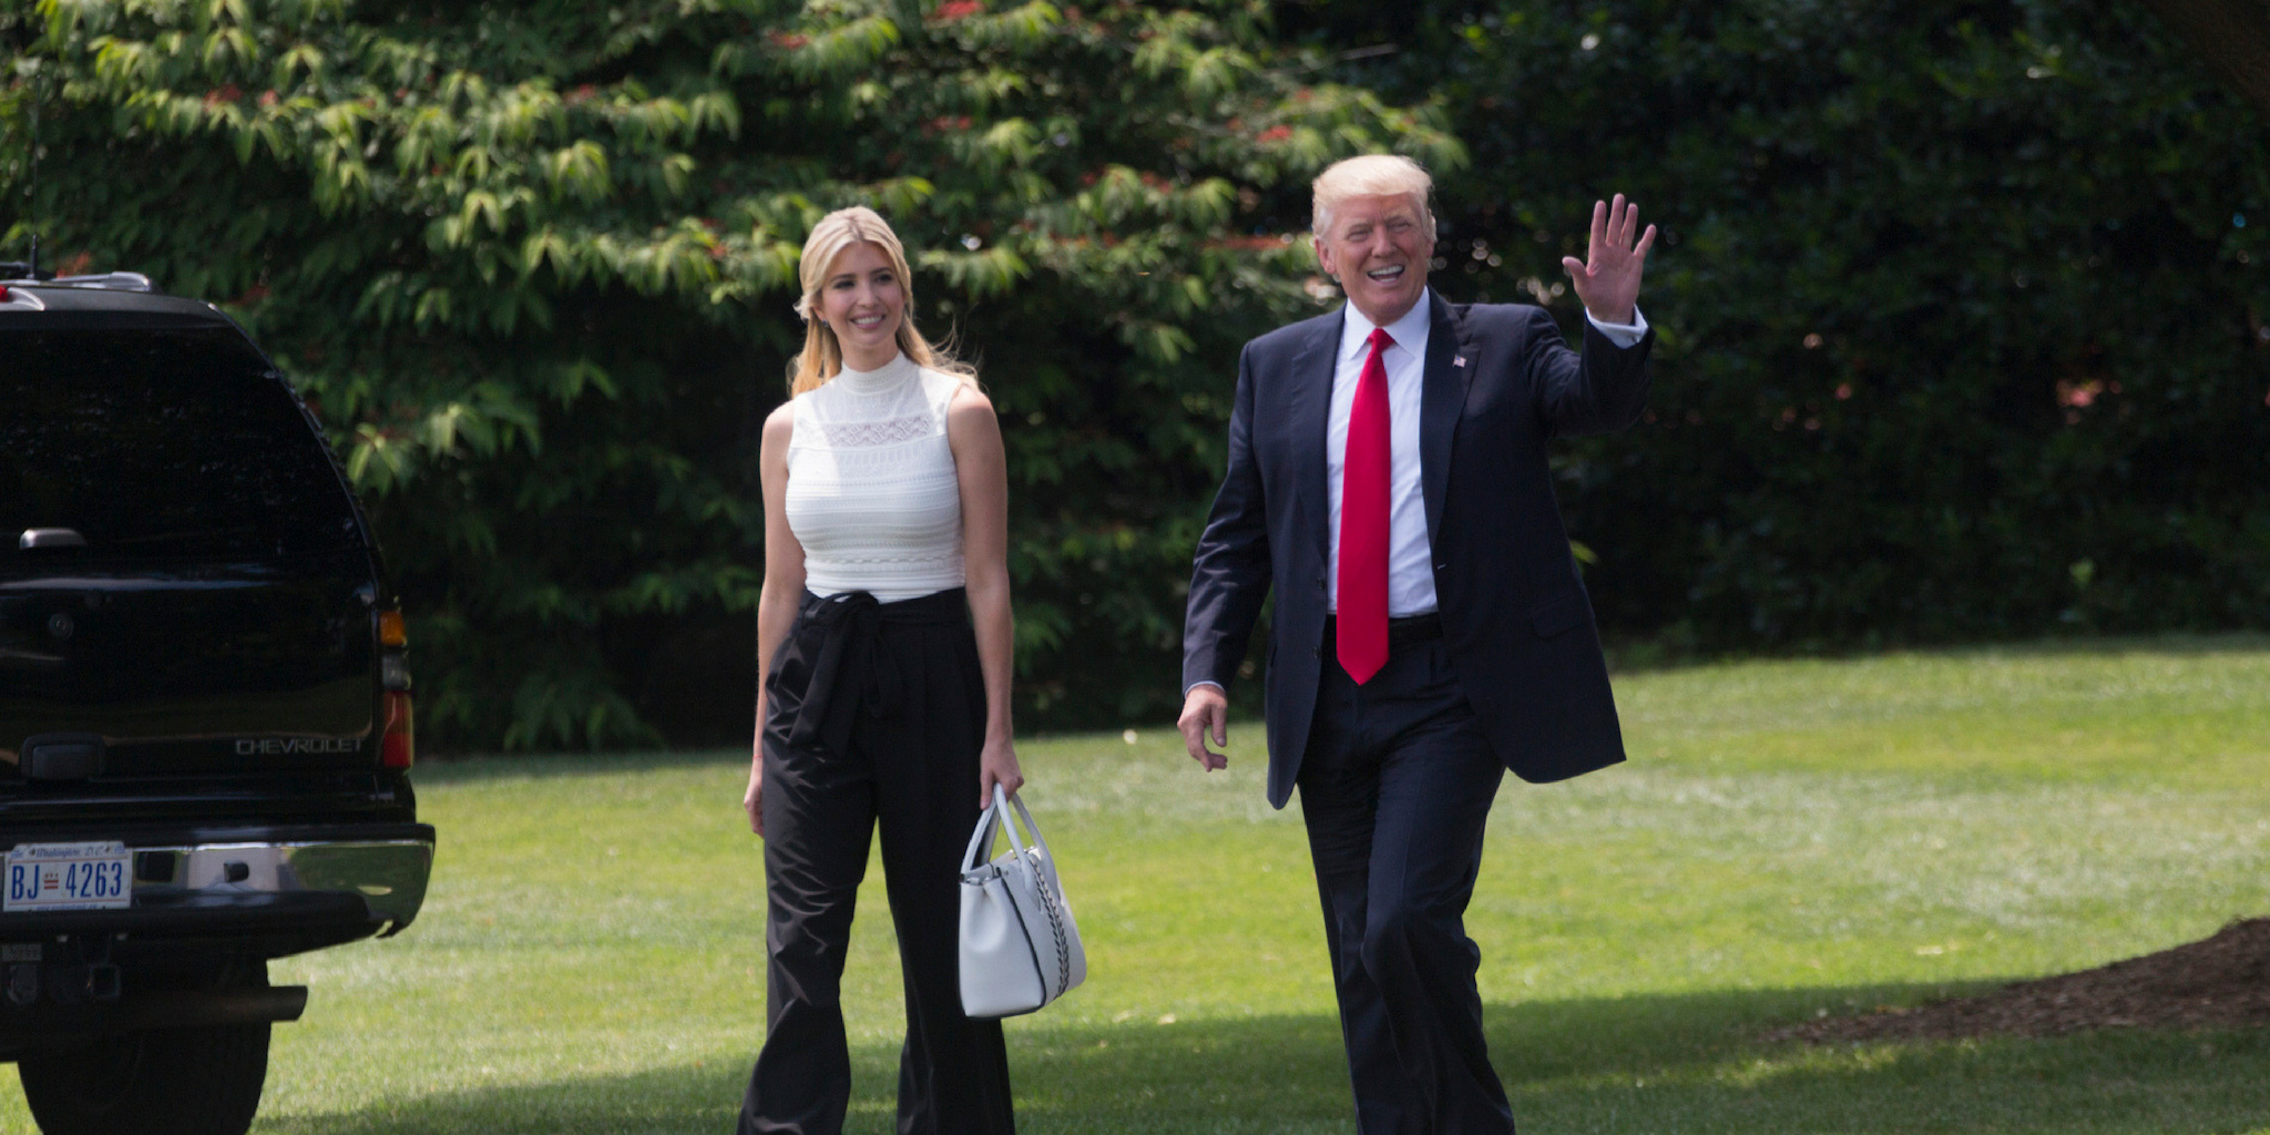 Ivanka Trump and her father Donald Trump